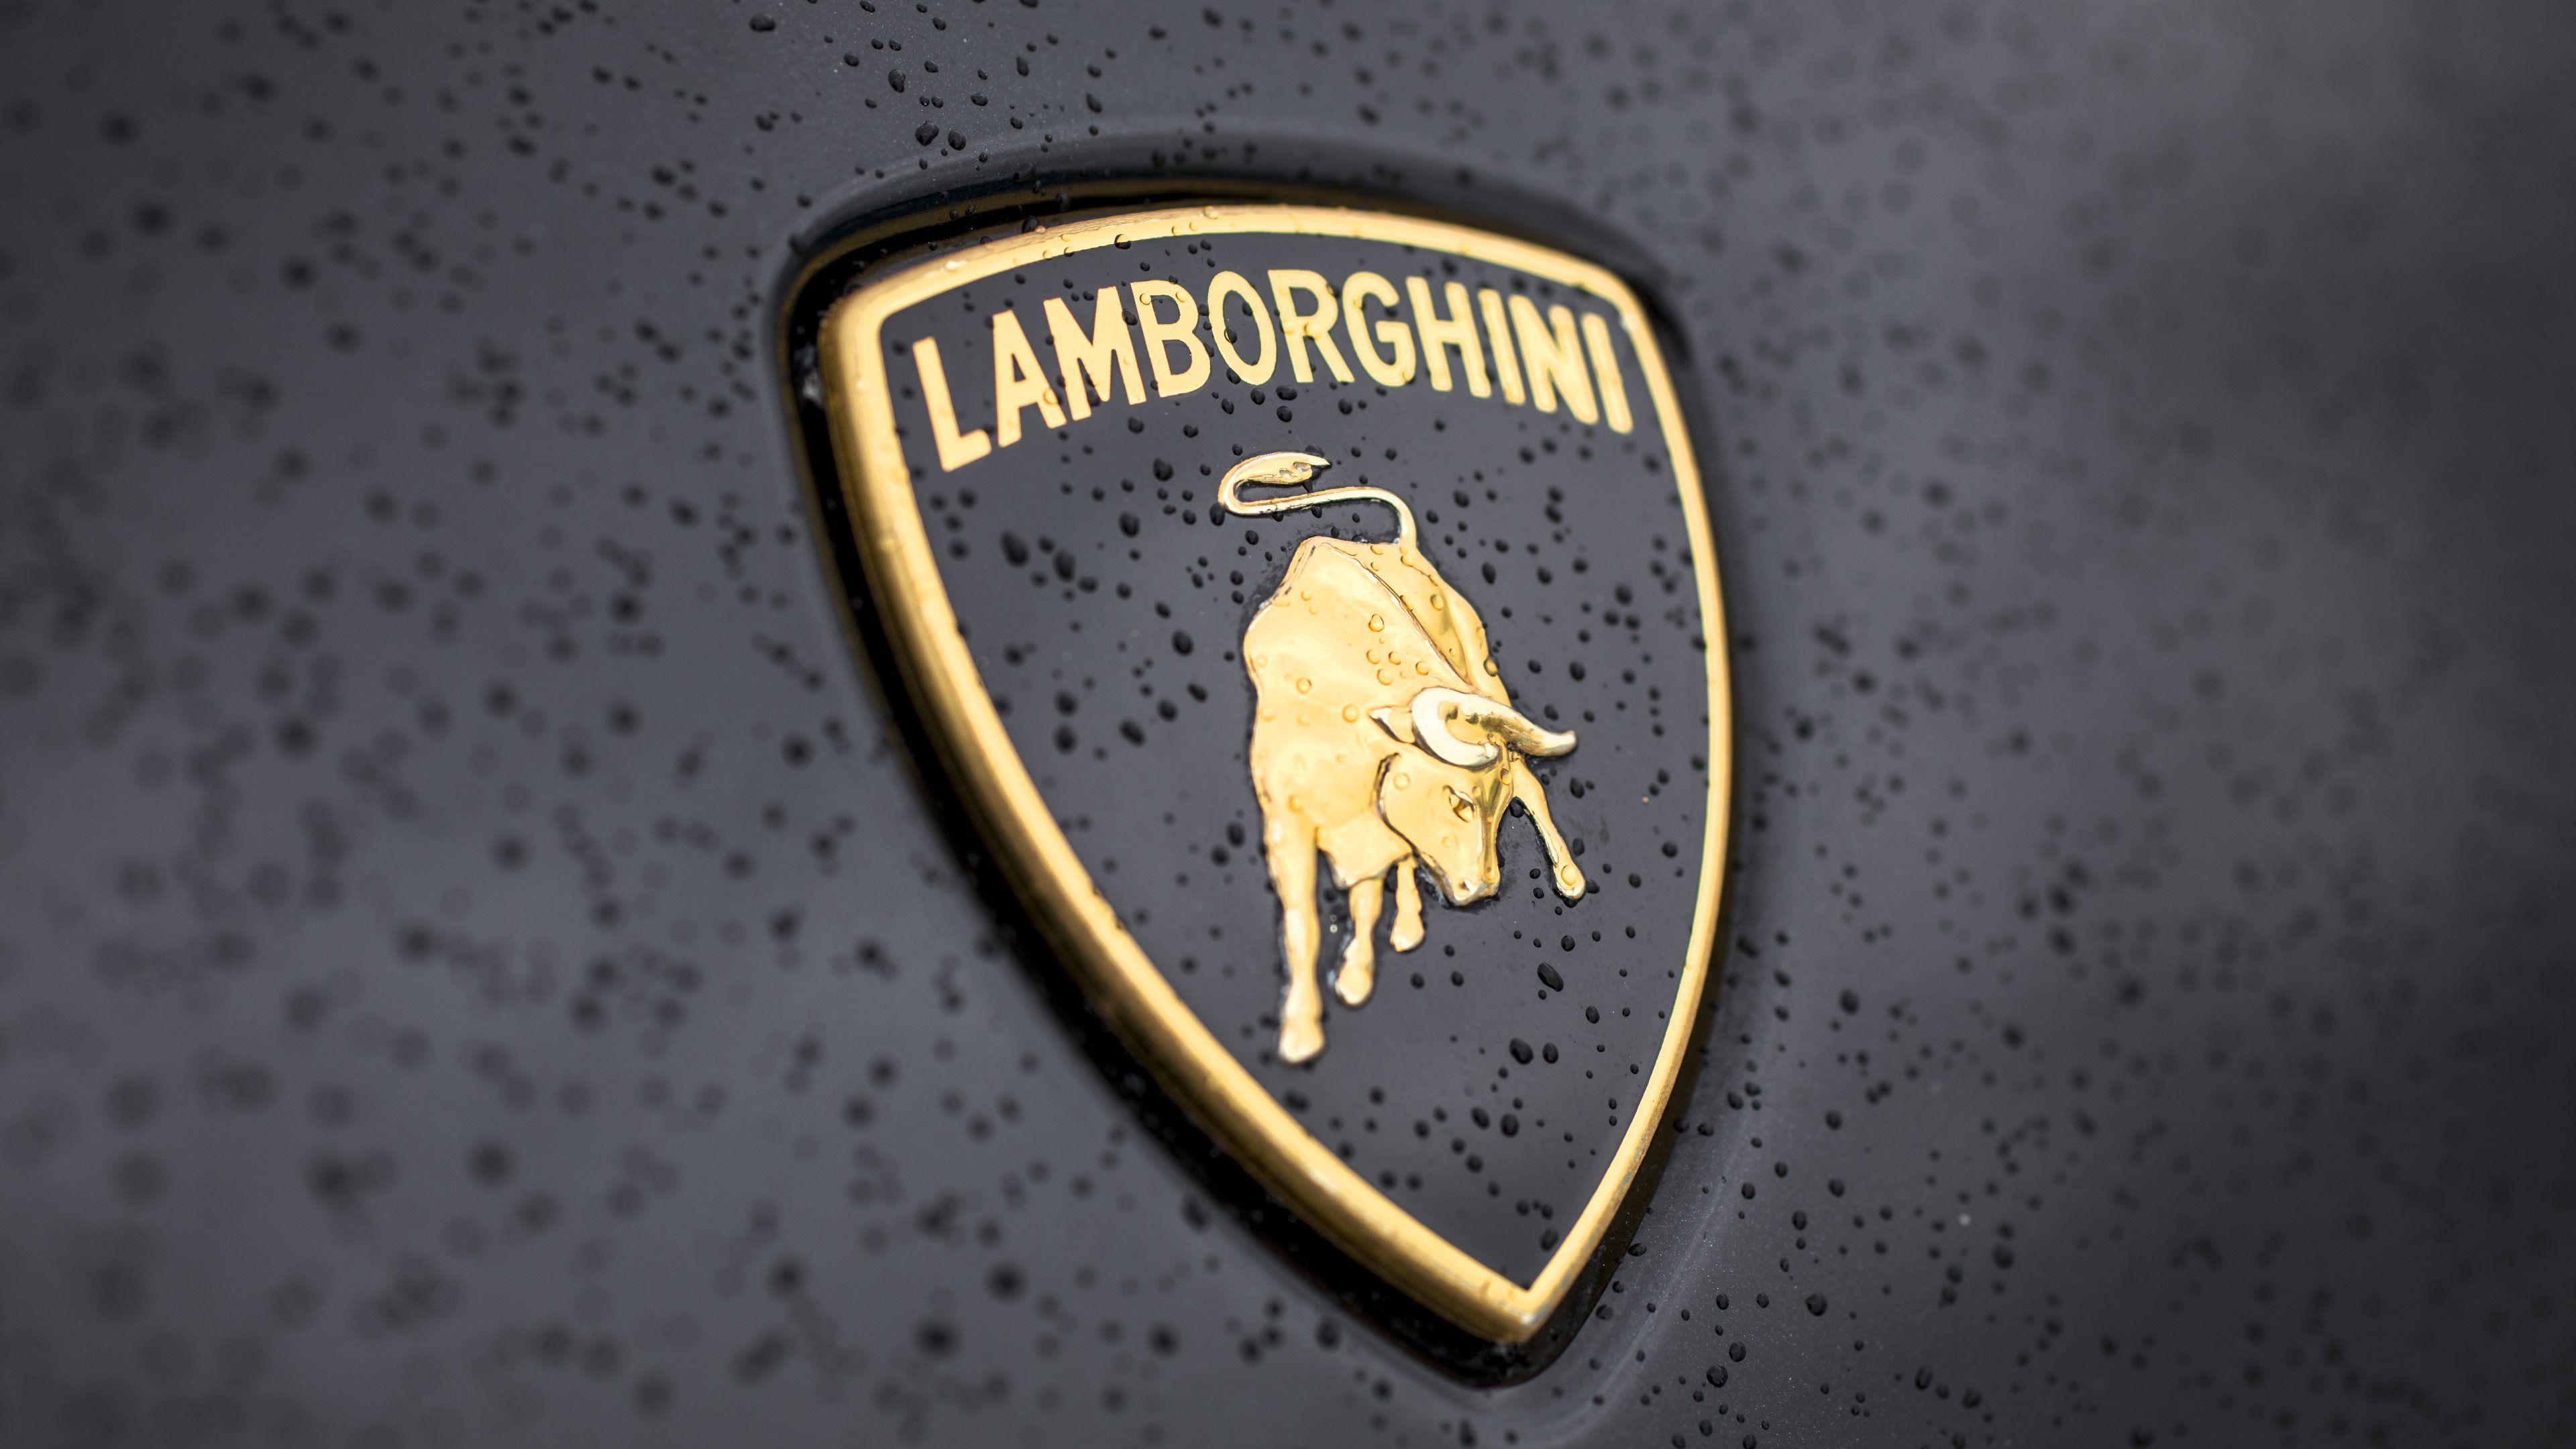 Lamborghini Logo wallpaper. Wallpaper, Background, Image, Art